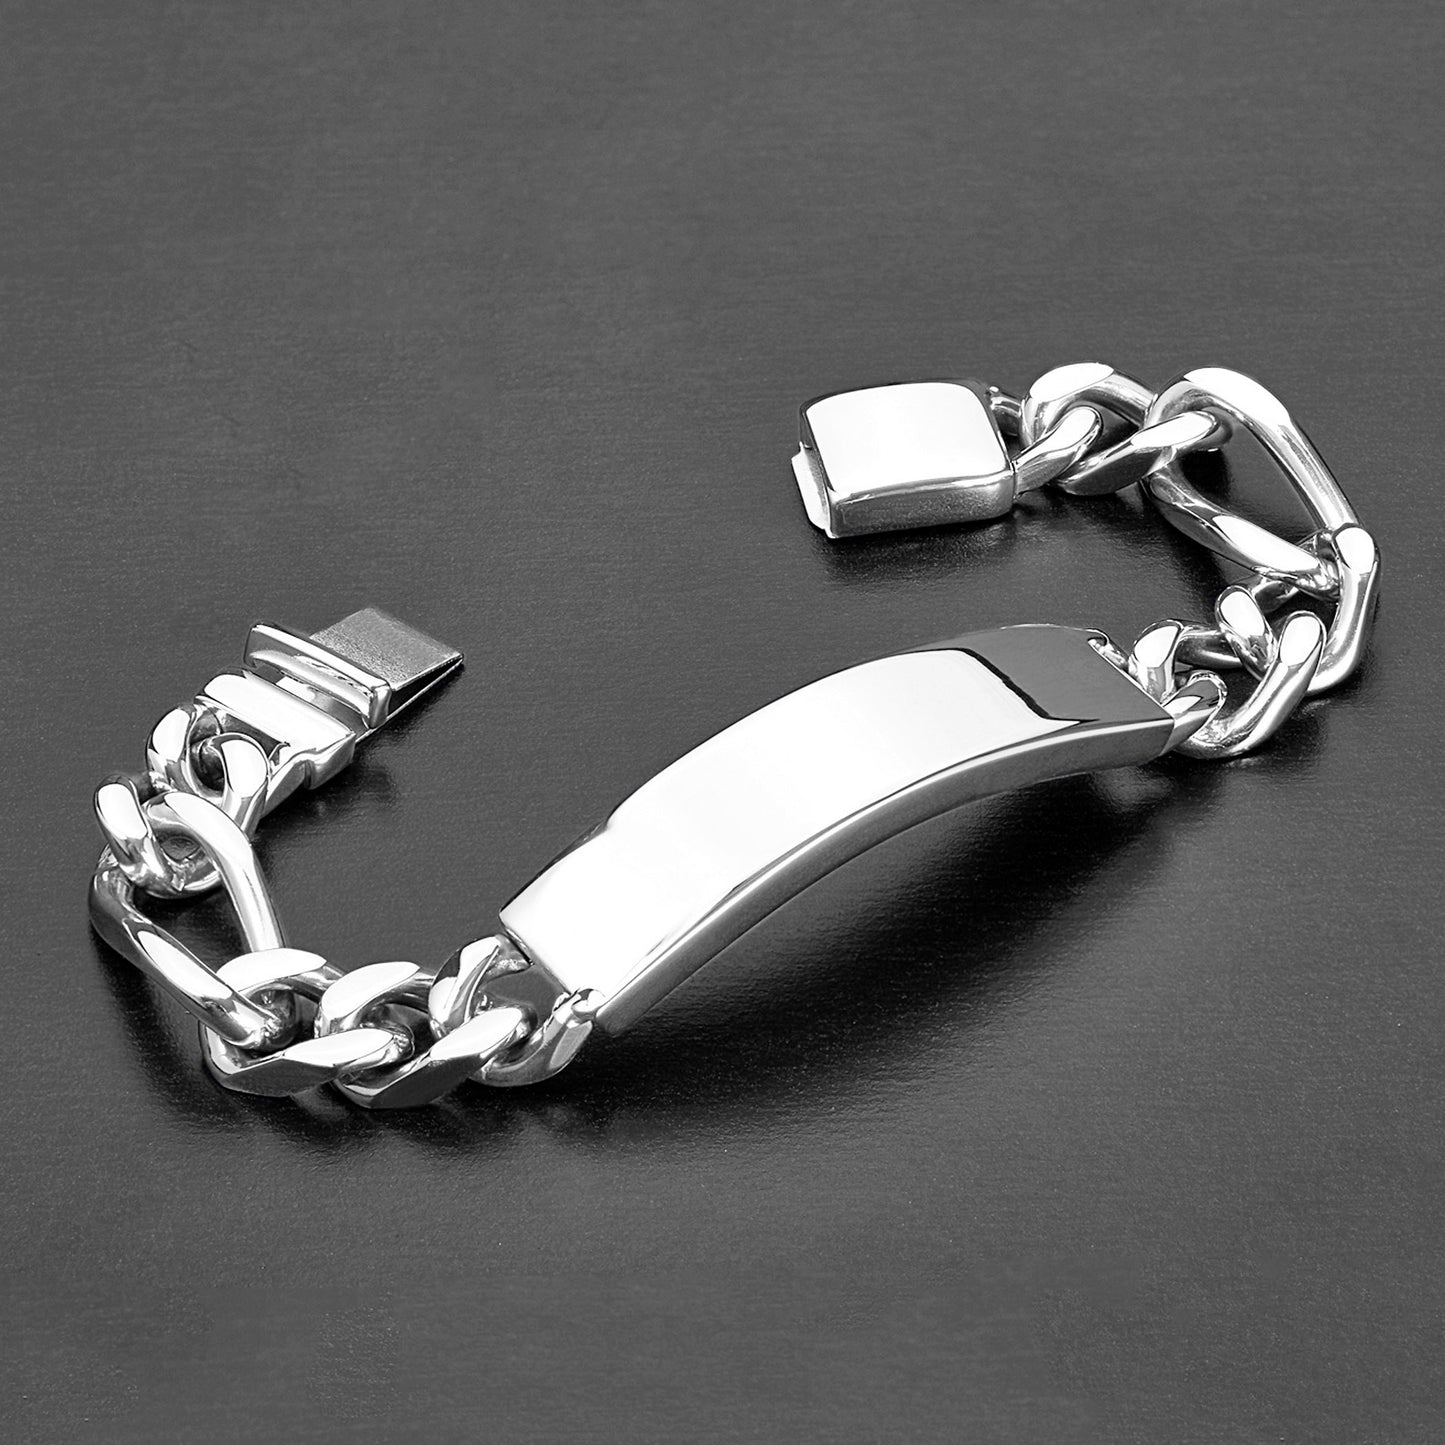 Stainless Steel Engravable Heavy ID Figaro Chain Bracelet (14 mm) - 8"